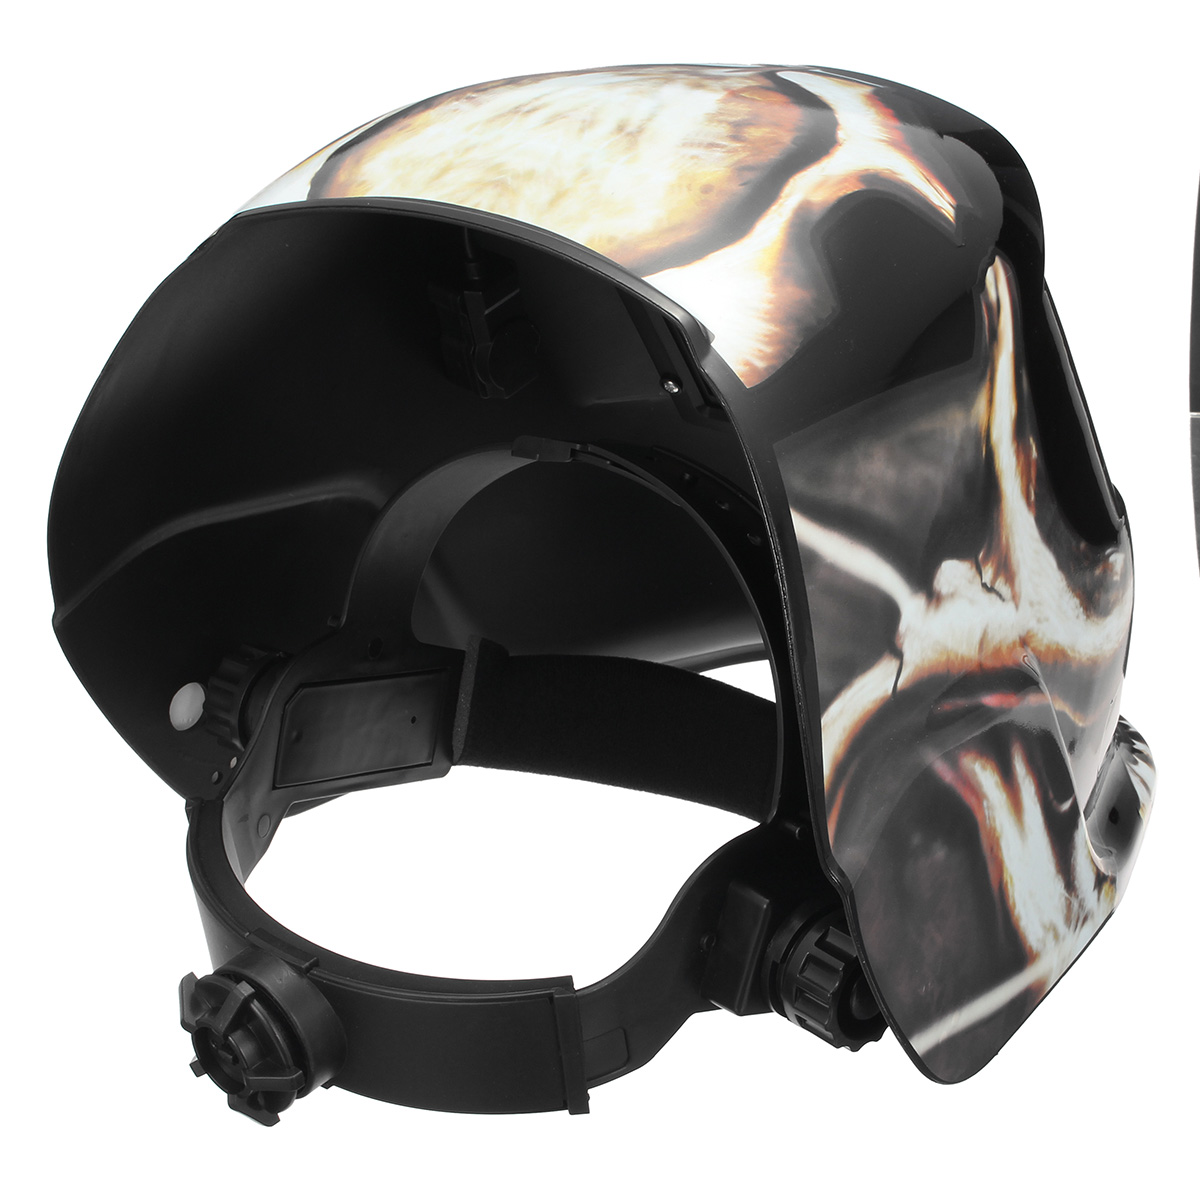 Skeleton-Pattern-Auto-Darkening-Solar-Welding-Welders-Helmet-Tig-Mask-Grinding-Welders-Masks-1185116-8